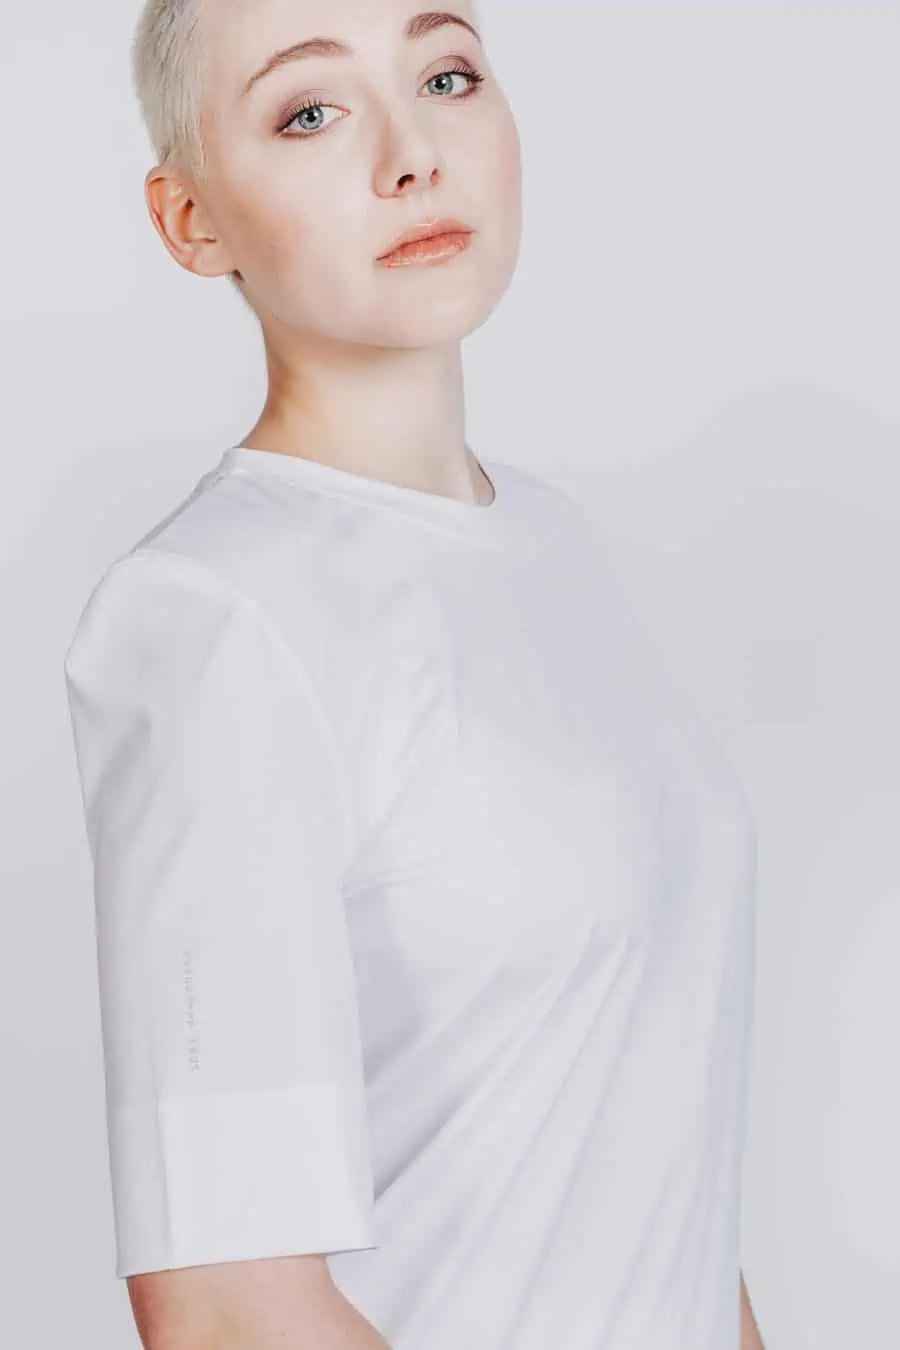 Deep White Black Modell LOU basic Damen T-Shirt mit Schulterpolstern Weiß, Rundhalsausschnitt und kurze Ärmel, Schriftzug 1001 Deep White, Ansicht Detail Ärmel